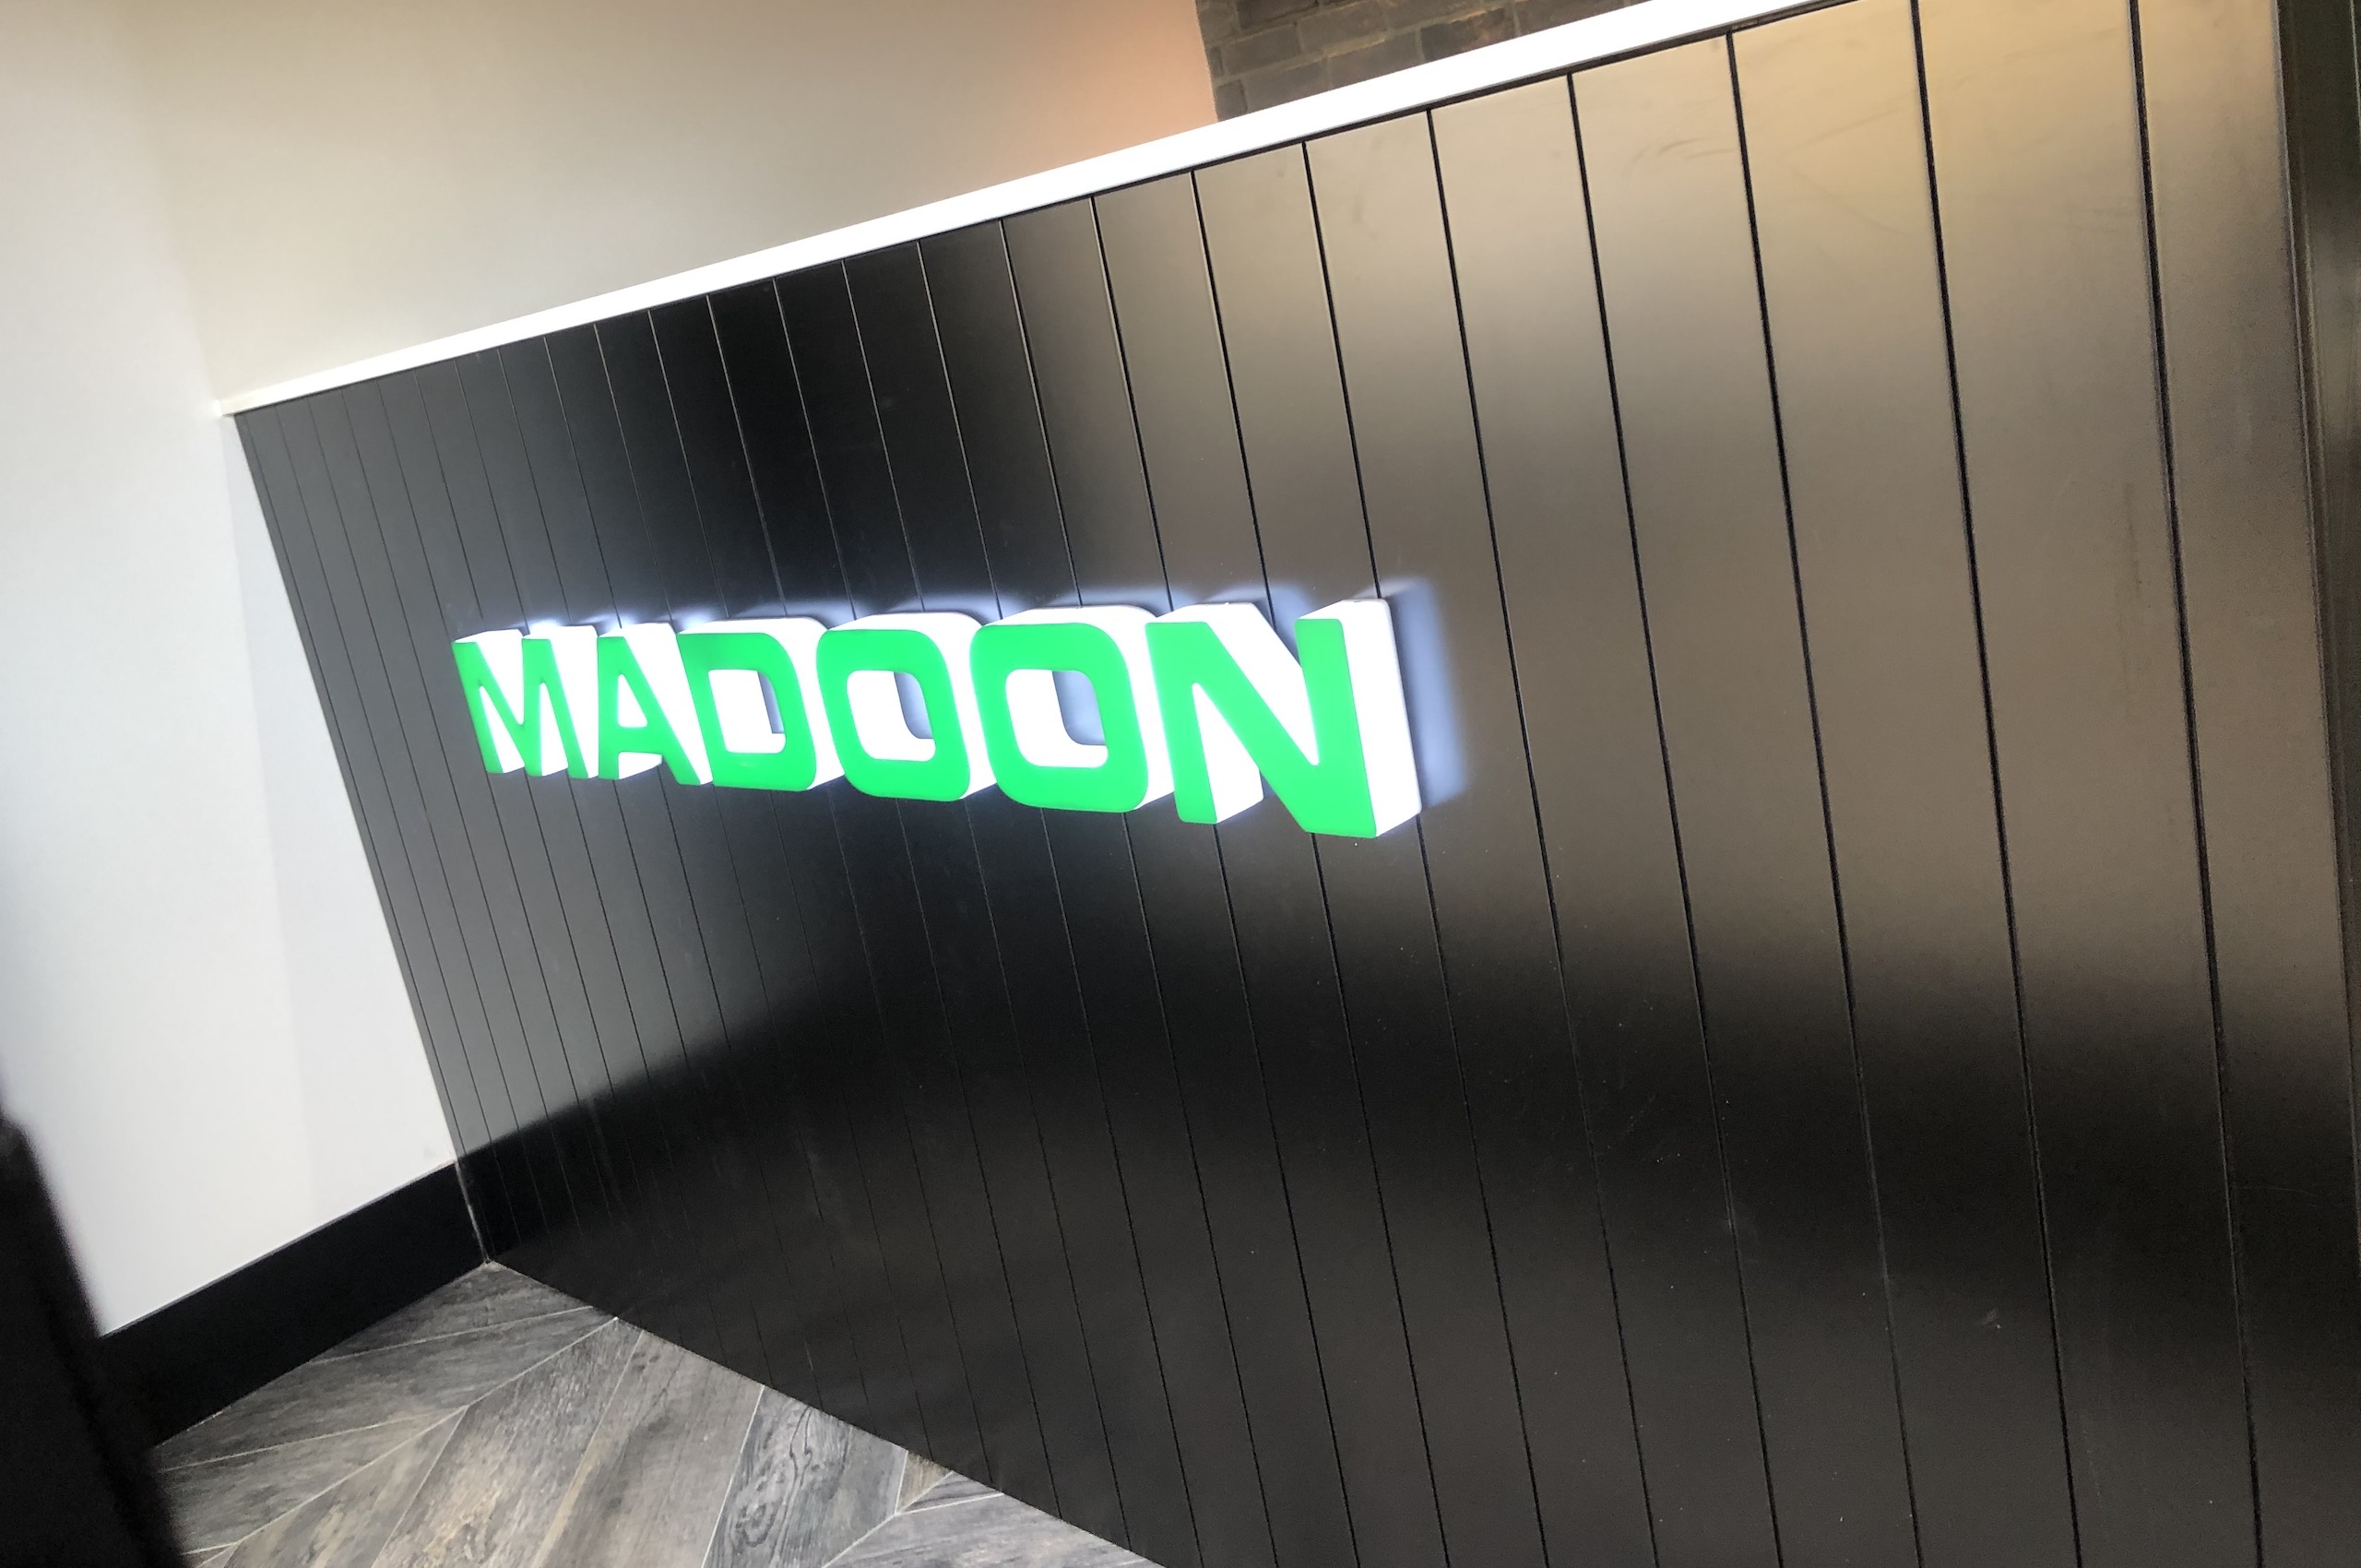 Madoon - Shop Signs